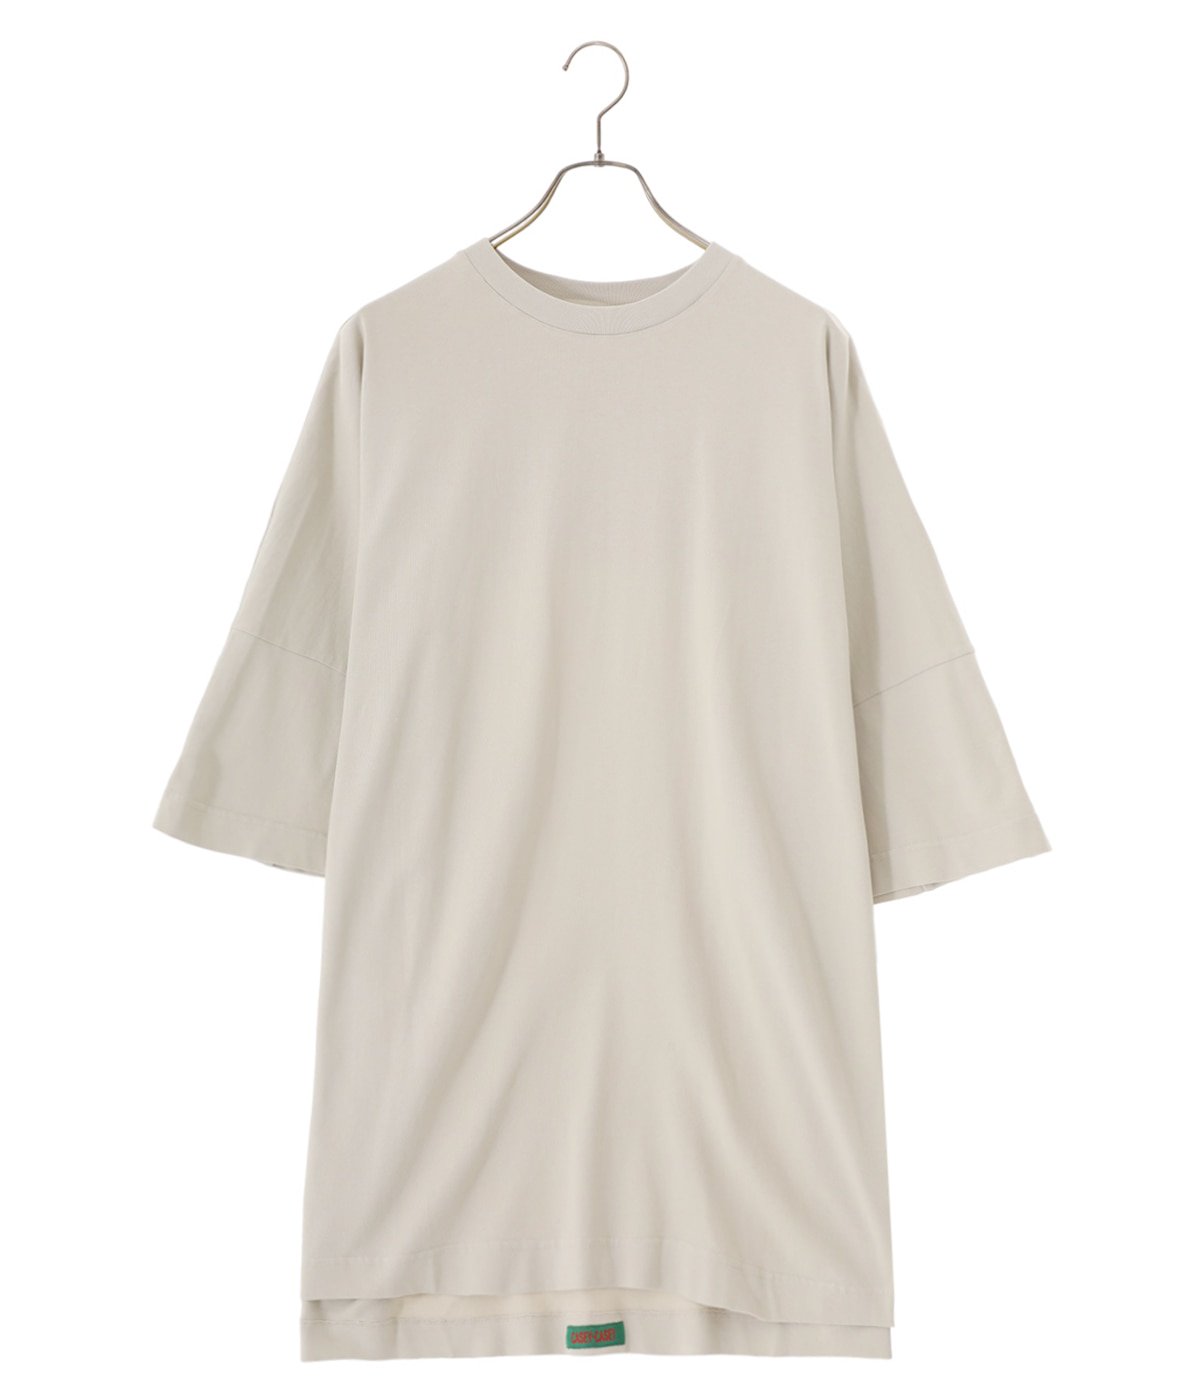 ODEM T SHIRT | CASEY CASEY(ケイシー ケイシー) / トップス カットソー半袖・Tシャツ (メンズ)の通販